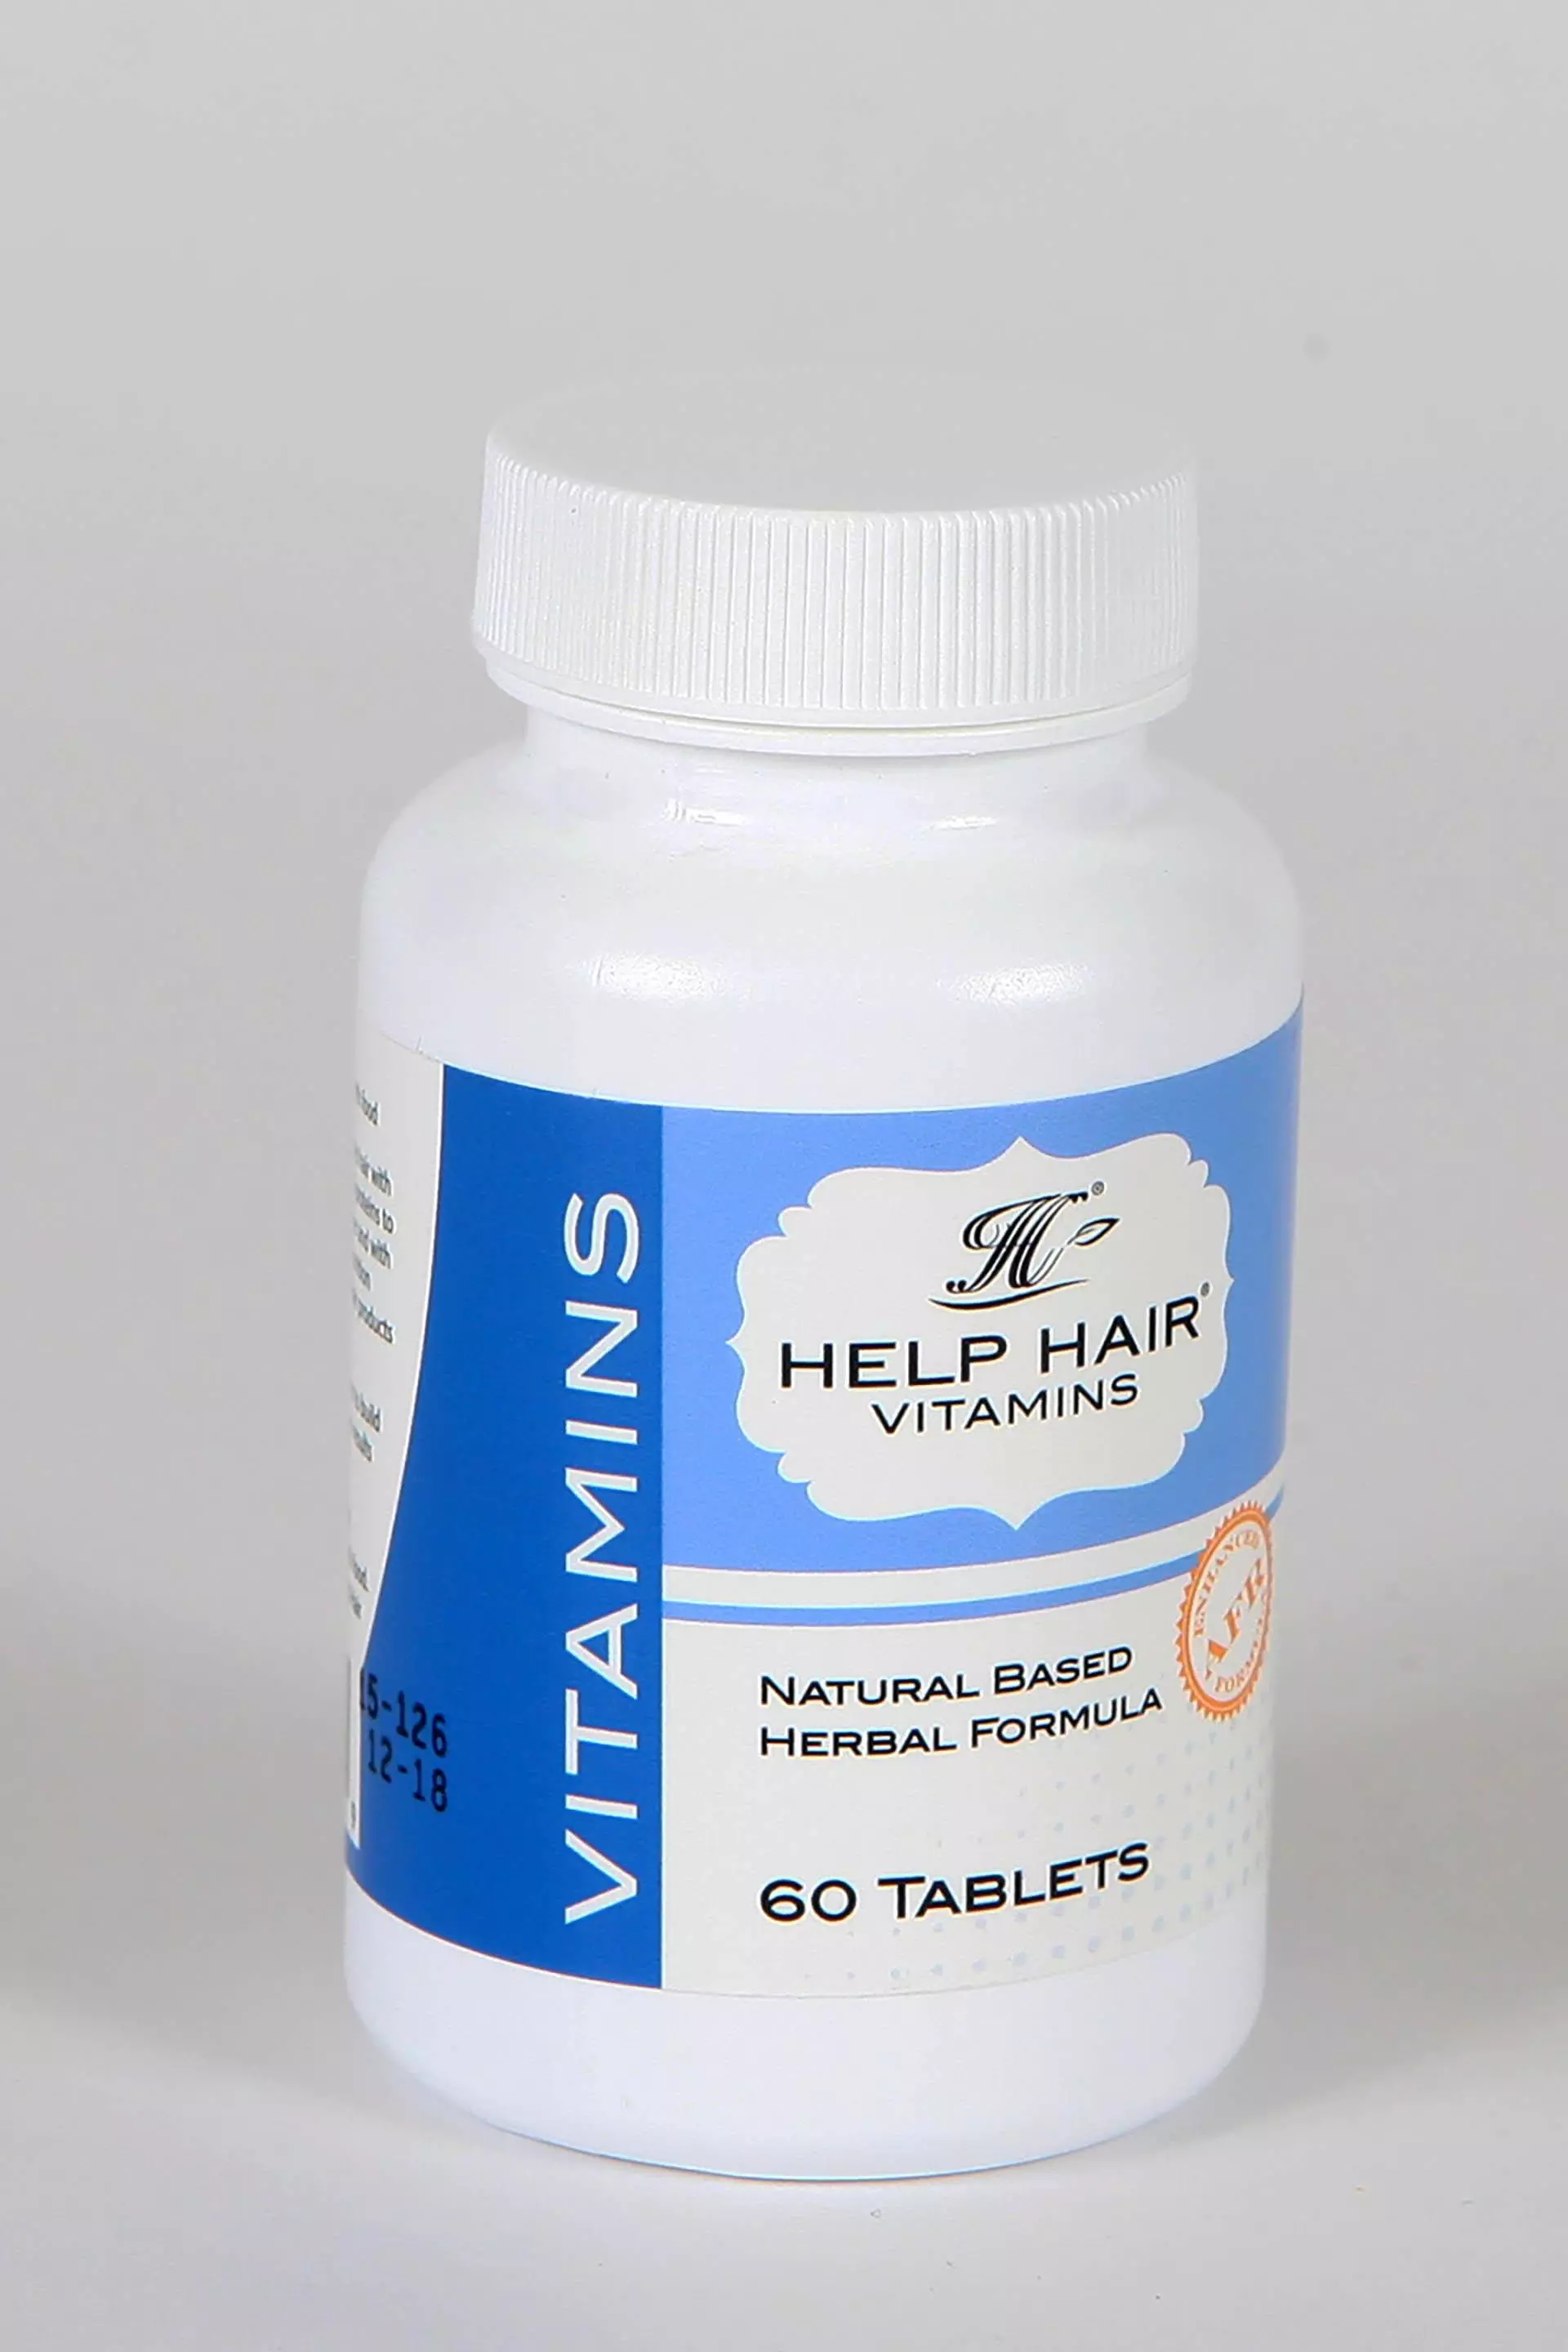 Help Hair vitamins